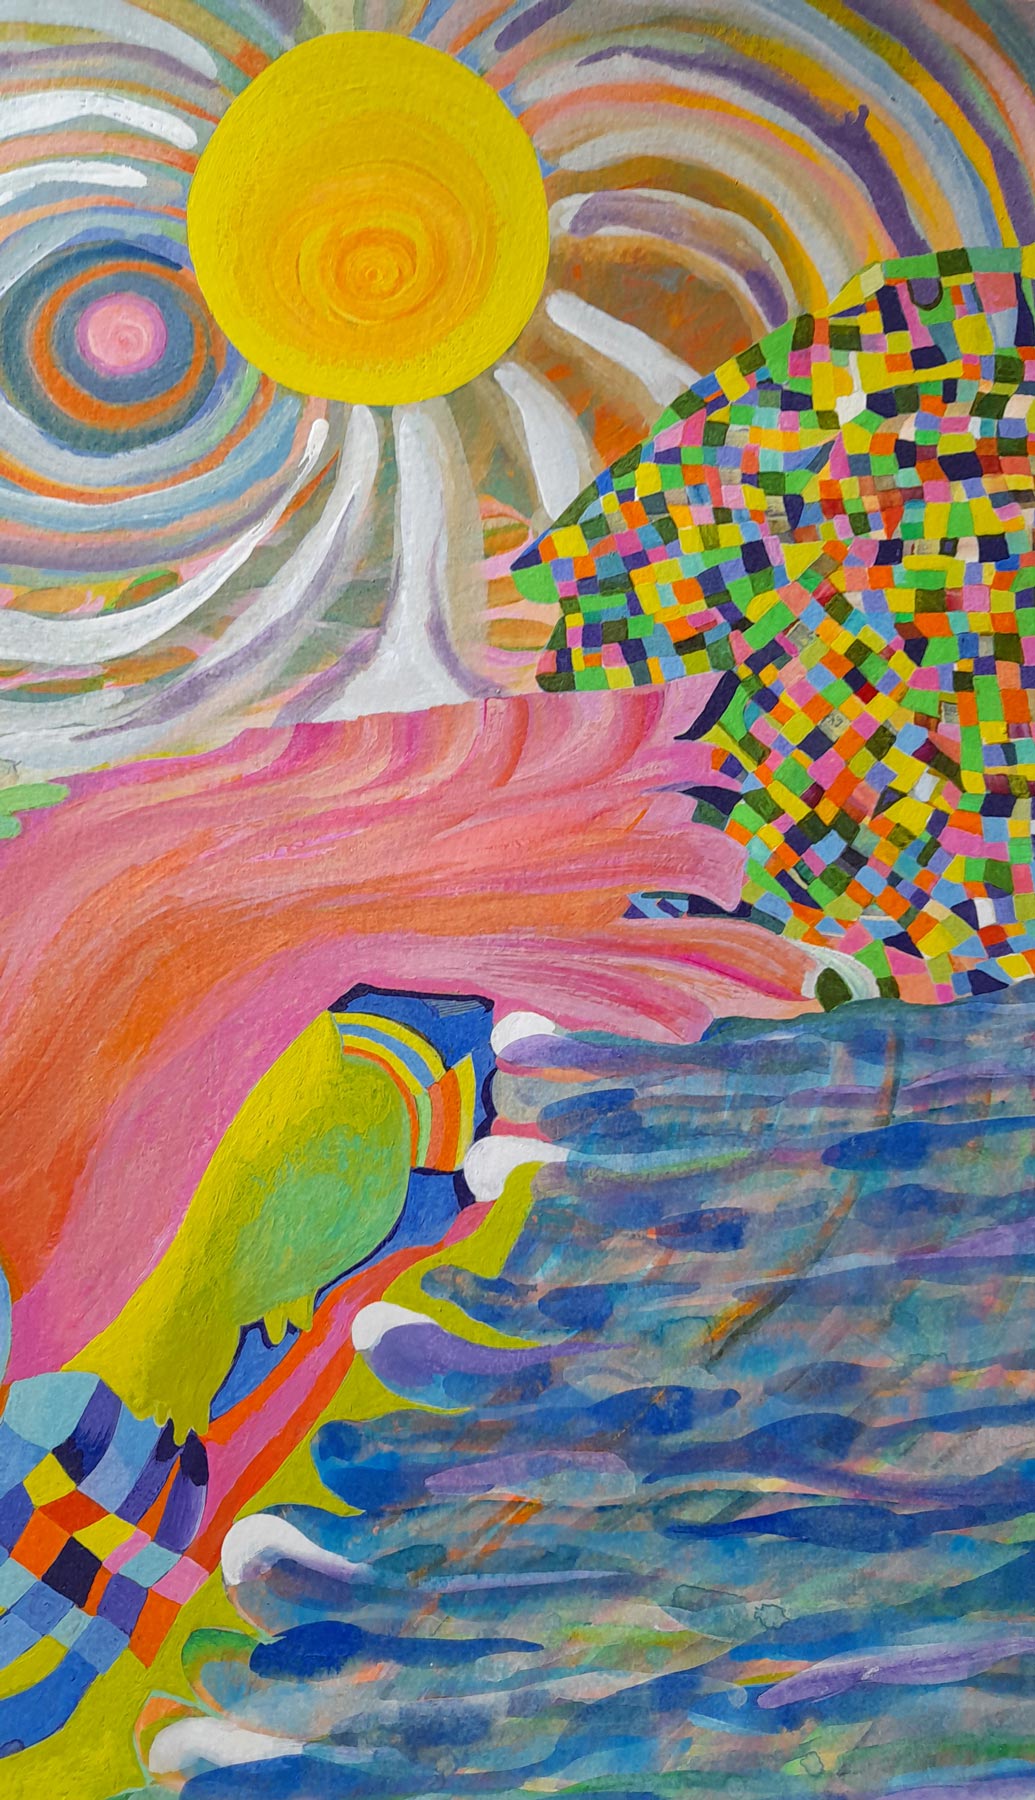 Barbara Thaden "Sea/Sun", 2022